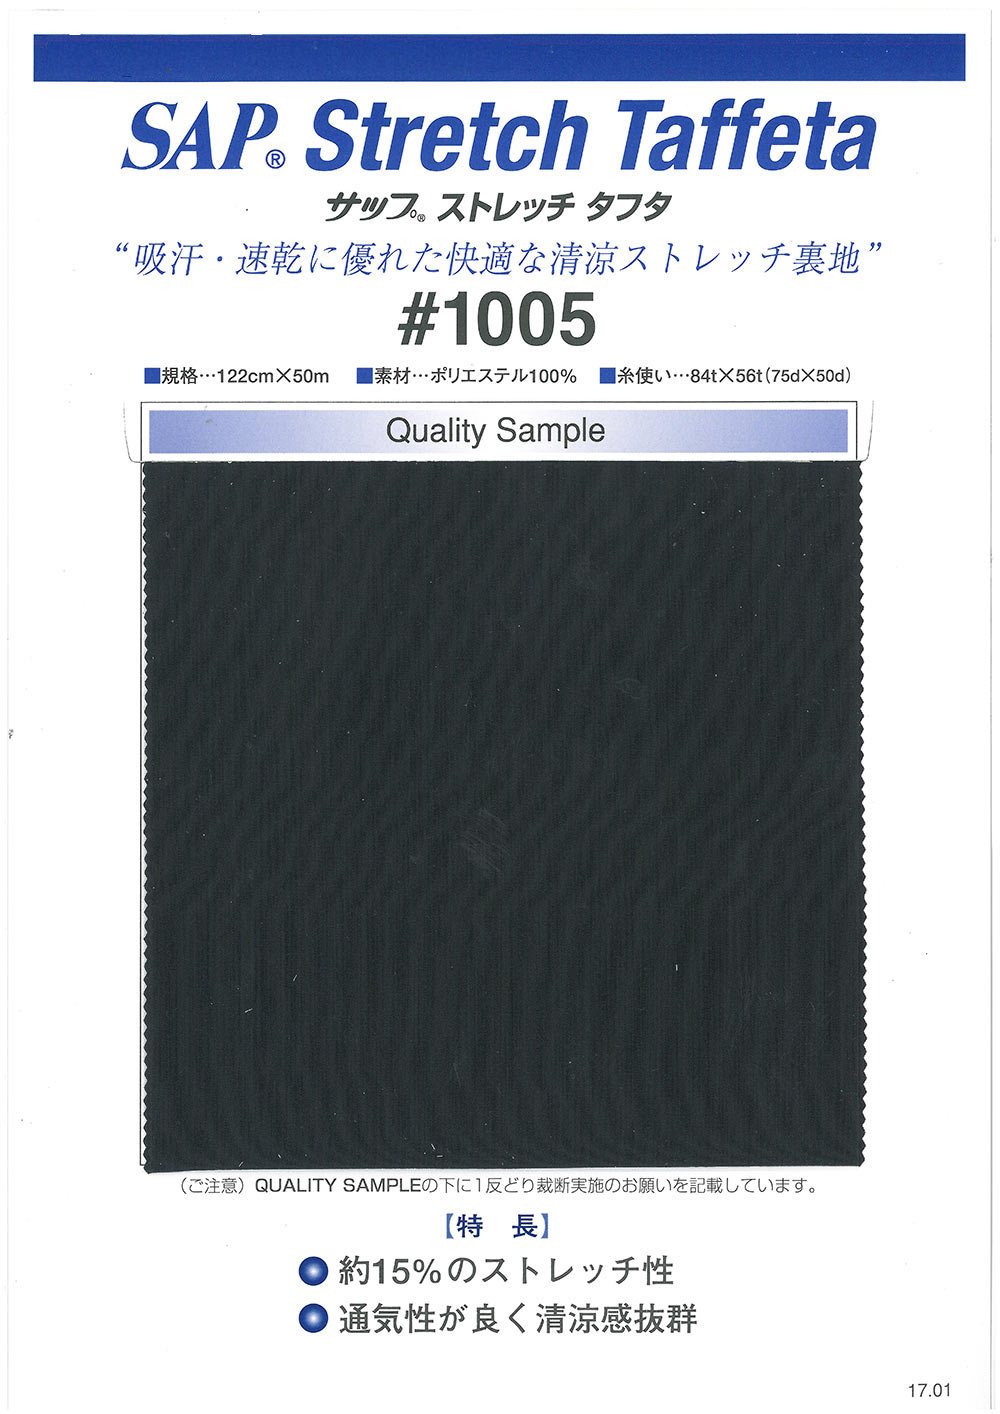 1005 Doublure Extensible SAP Cool (Absorption De La Transpiration, Séchage Rapide)[Garniture] TORAY